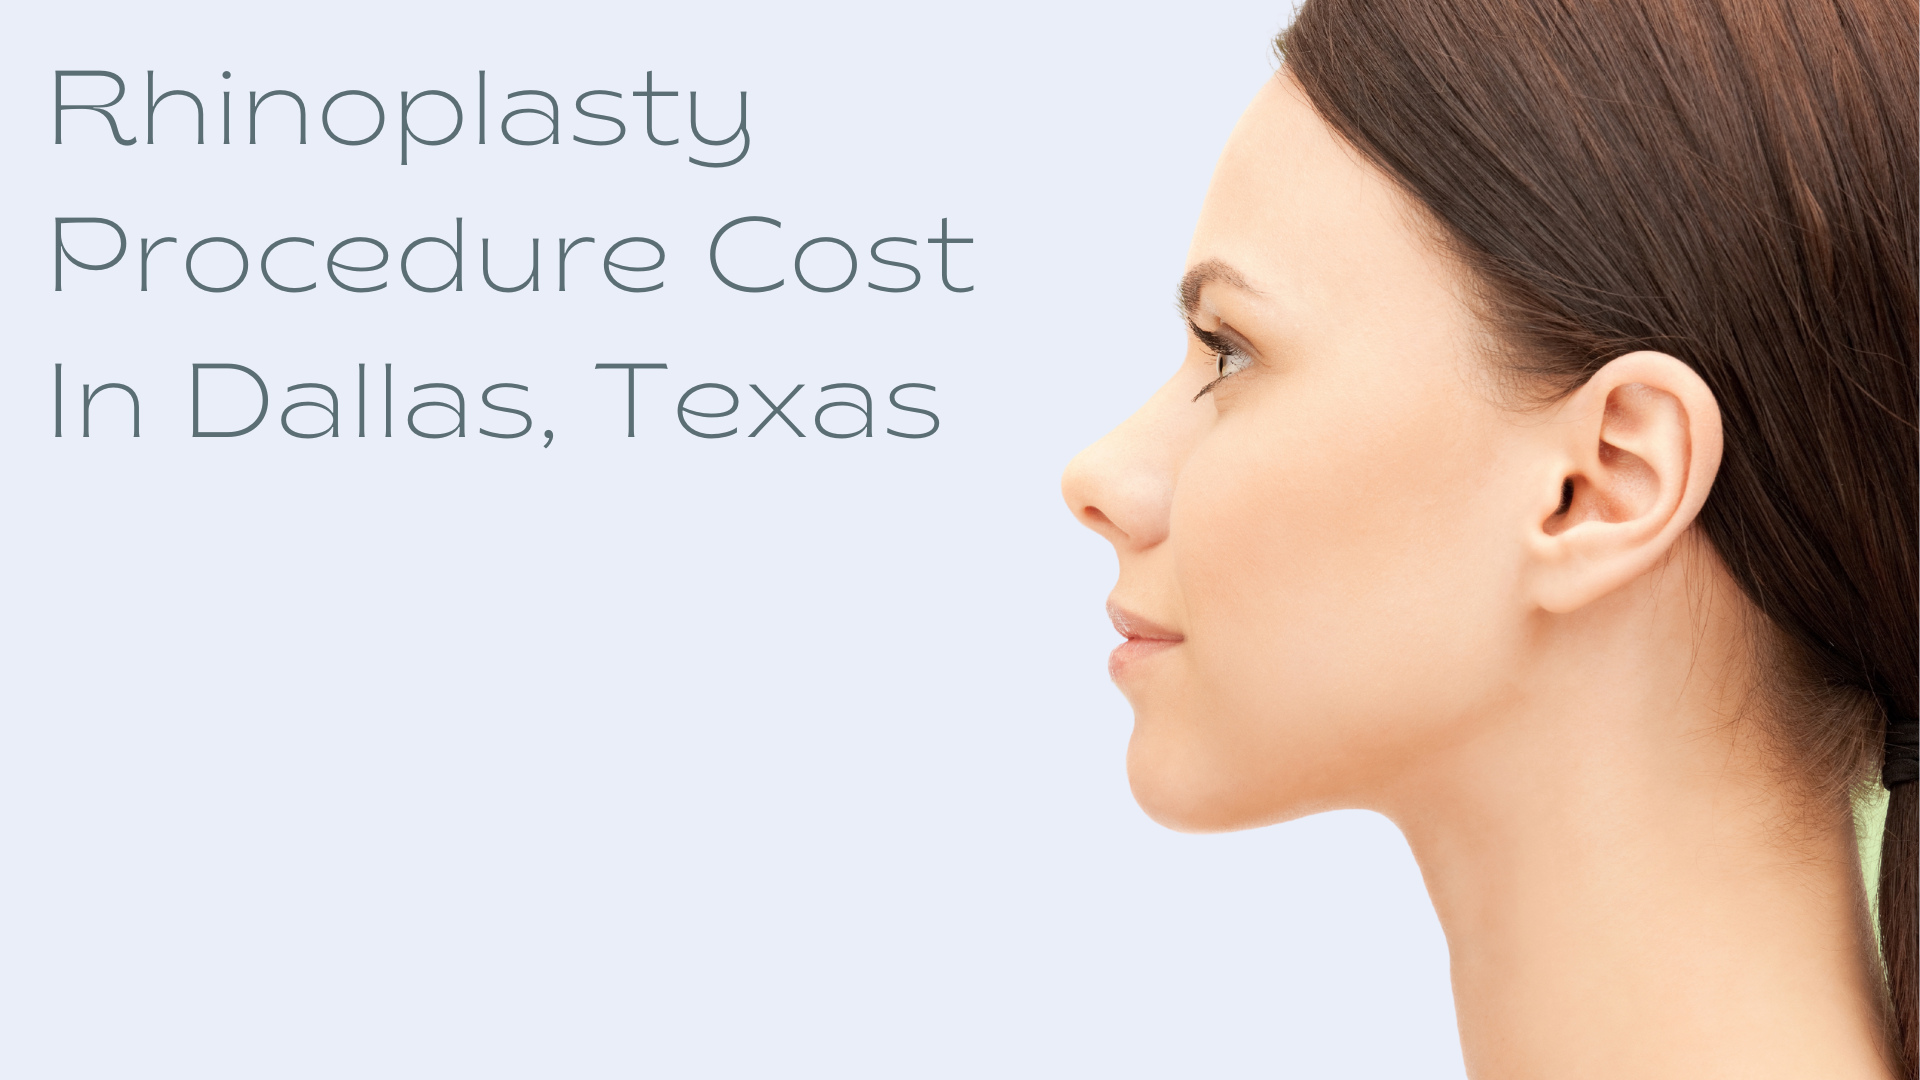 Rhinoplasty Procedure Cost In Dallas, Texas